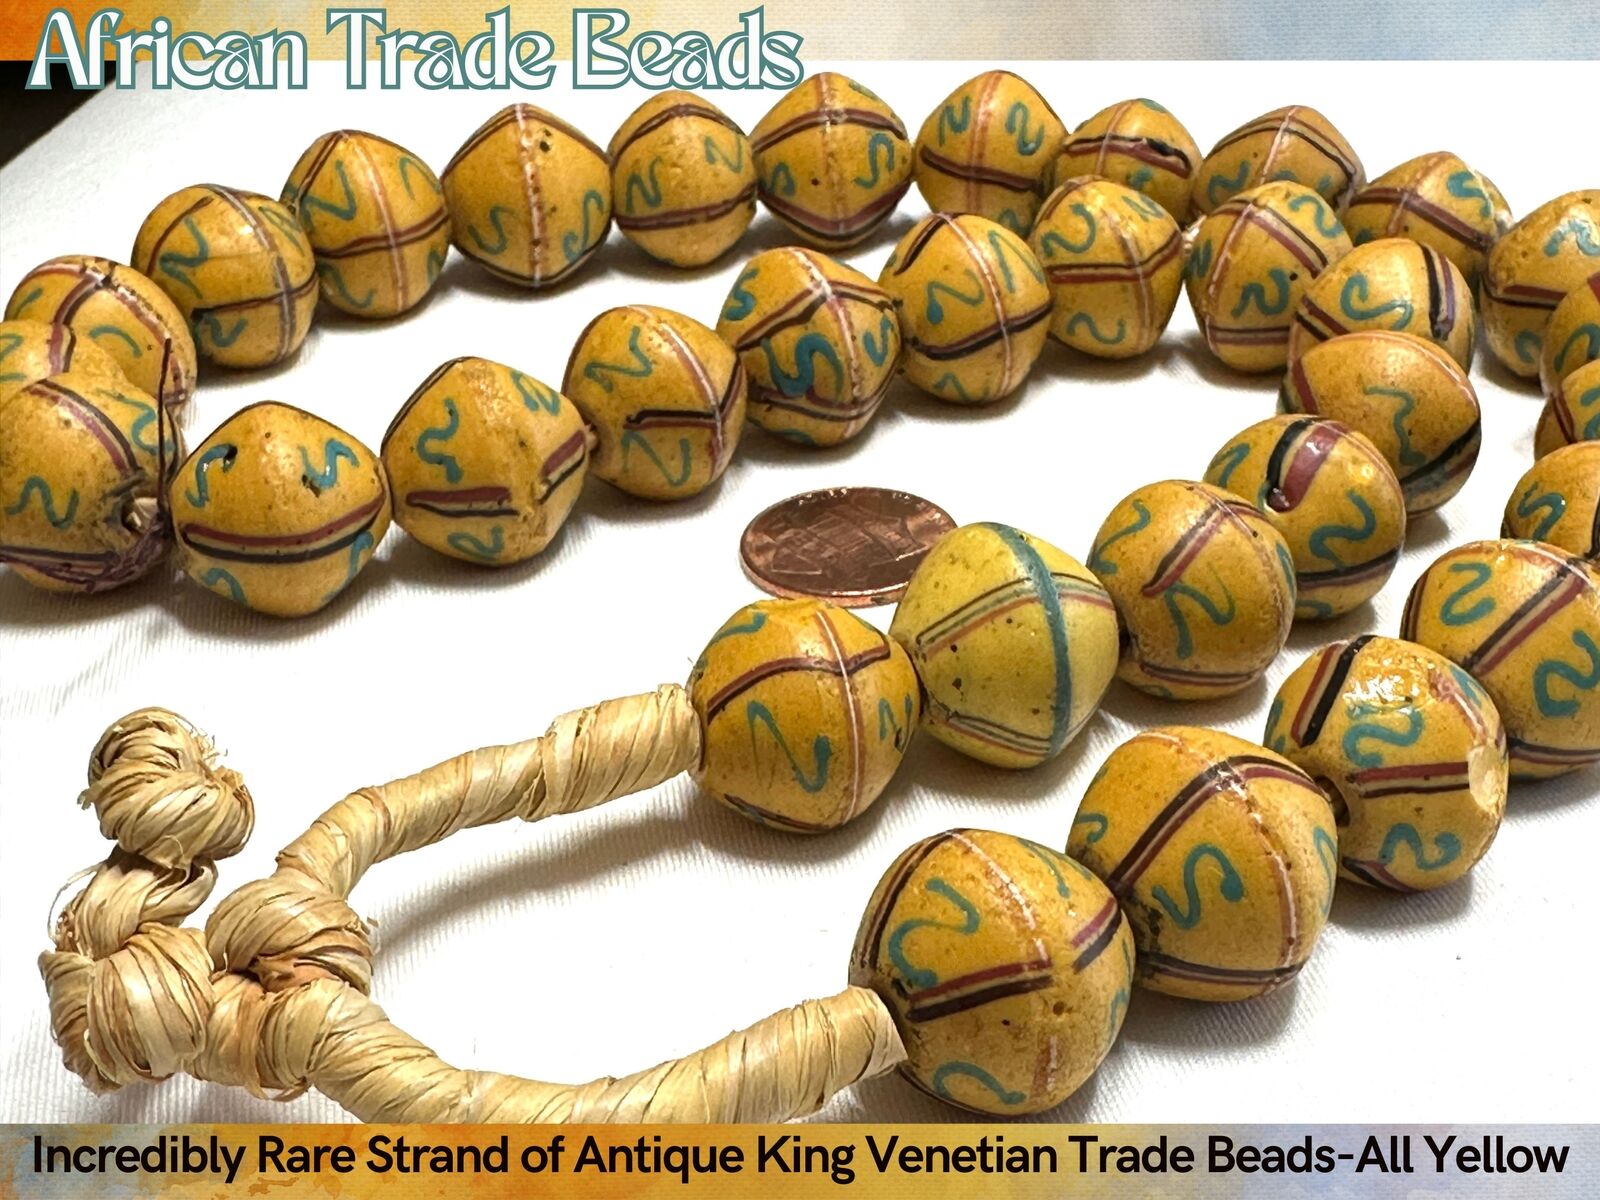 Incredible Rare Strand of Antique King Venetian Trade Beads